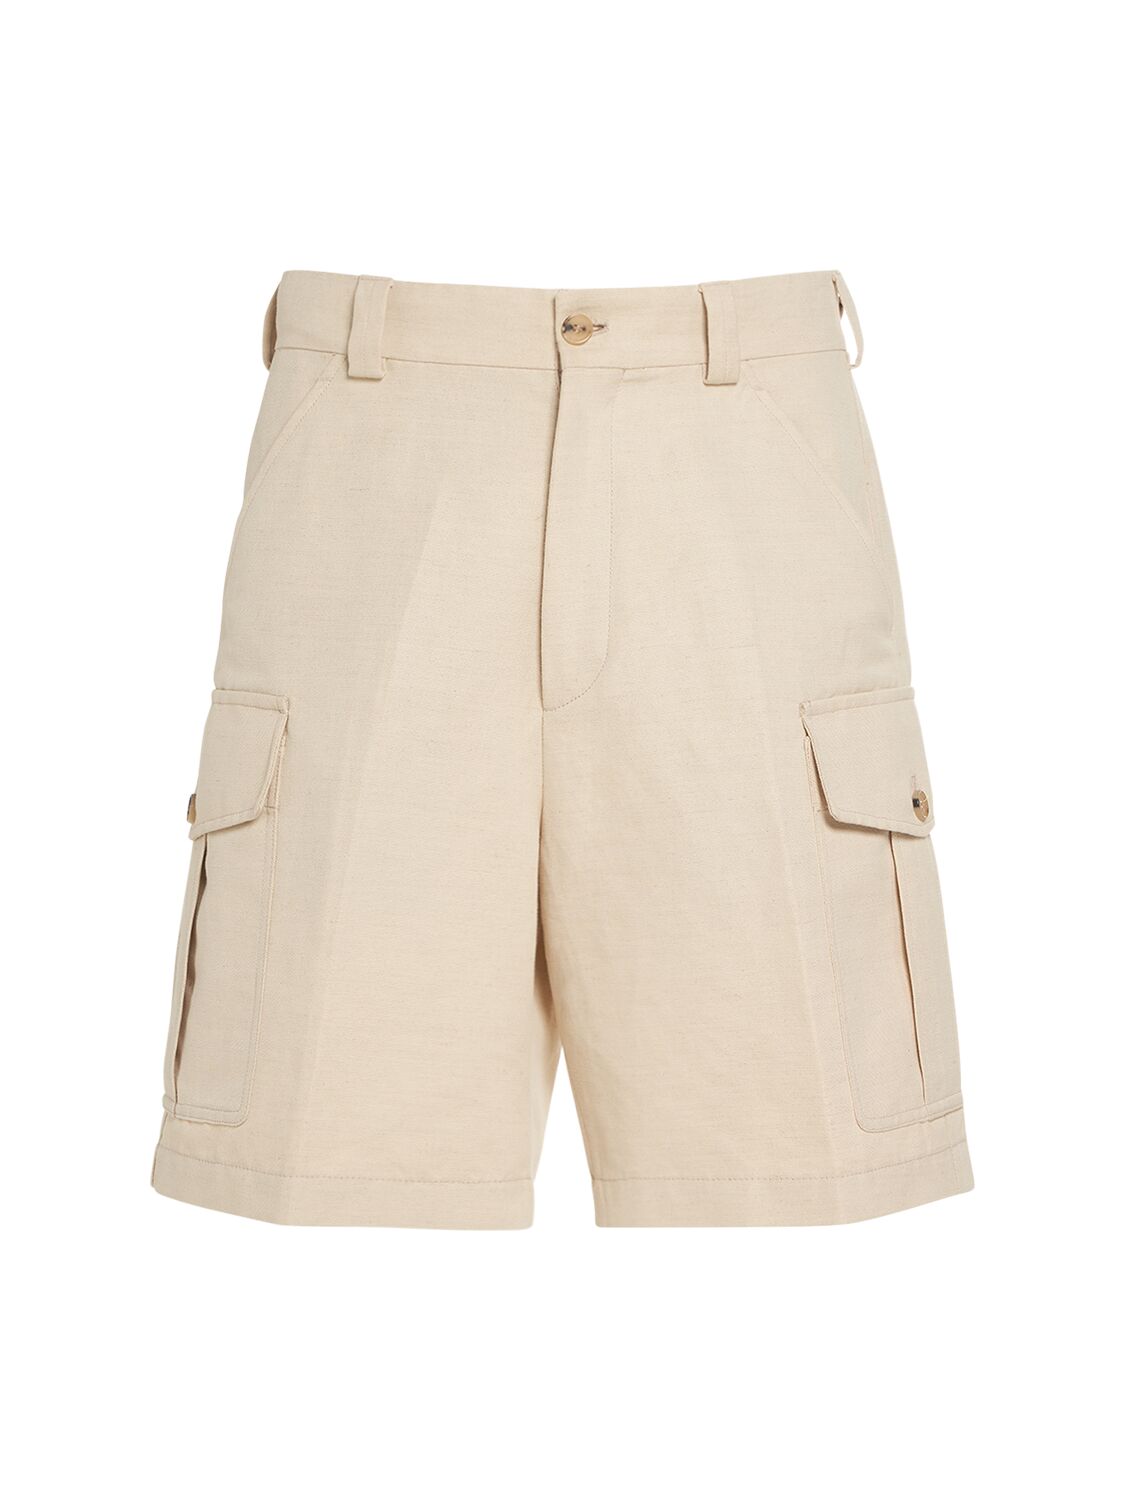 Image of Bizen Cotton & Linen Bermuda Shorts